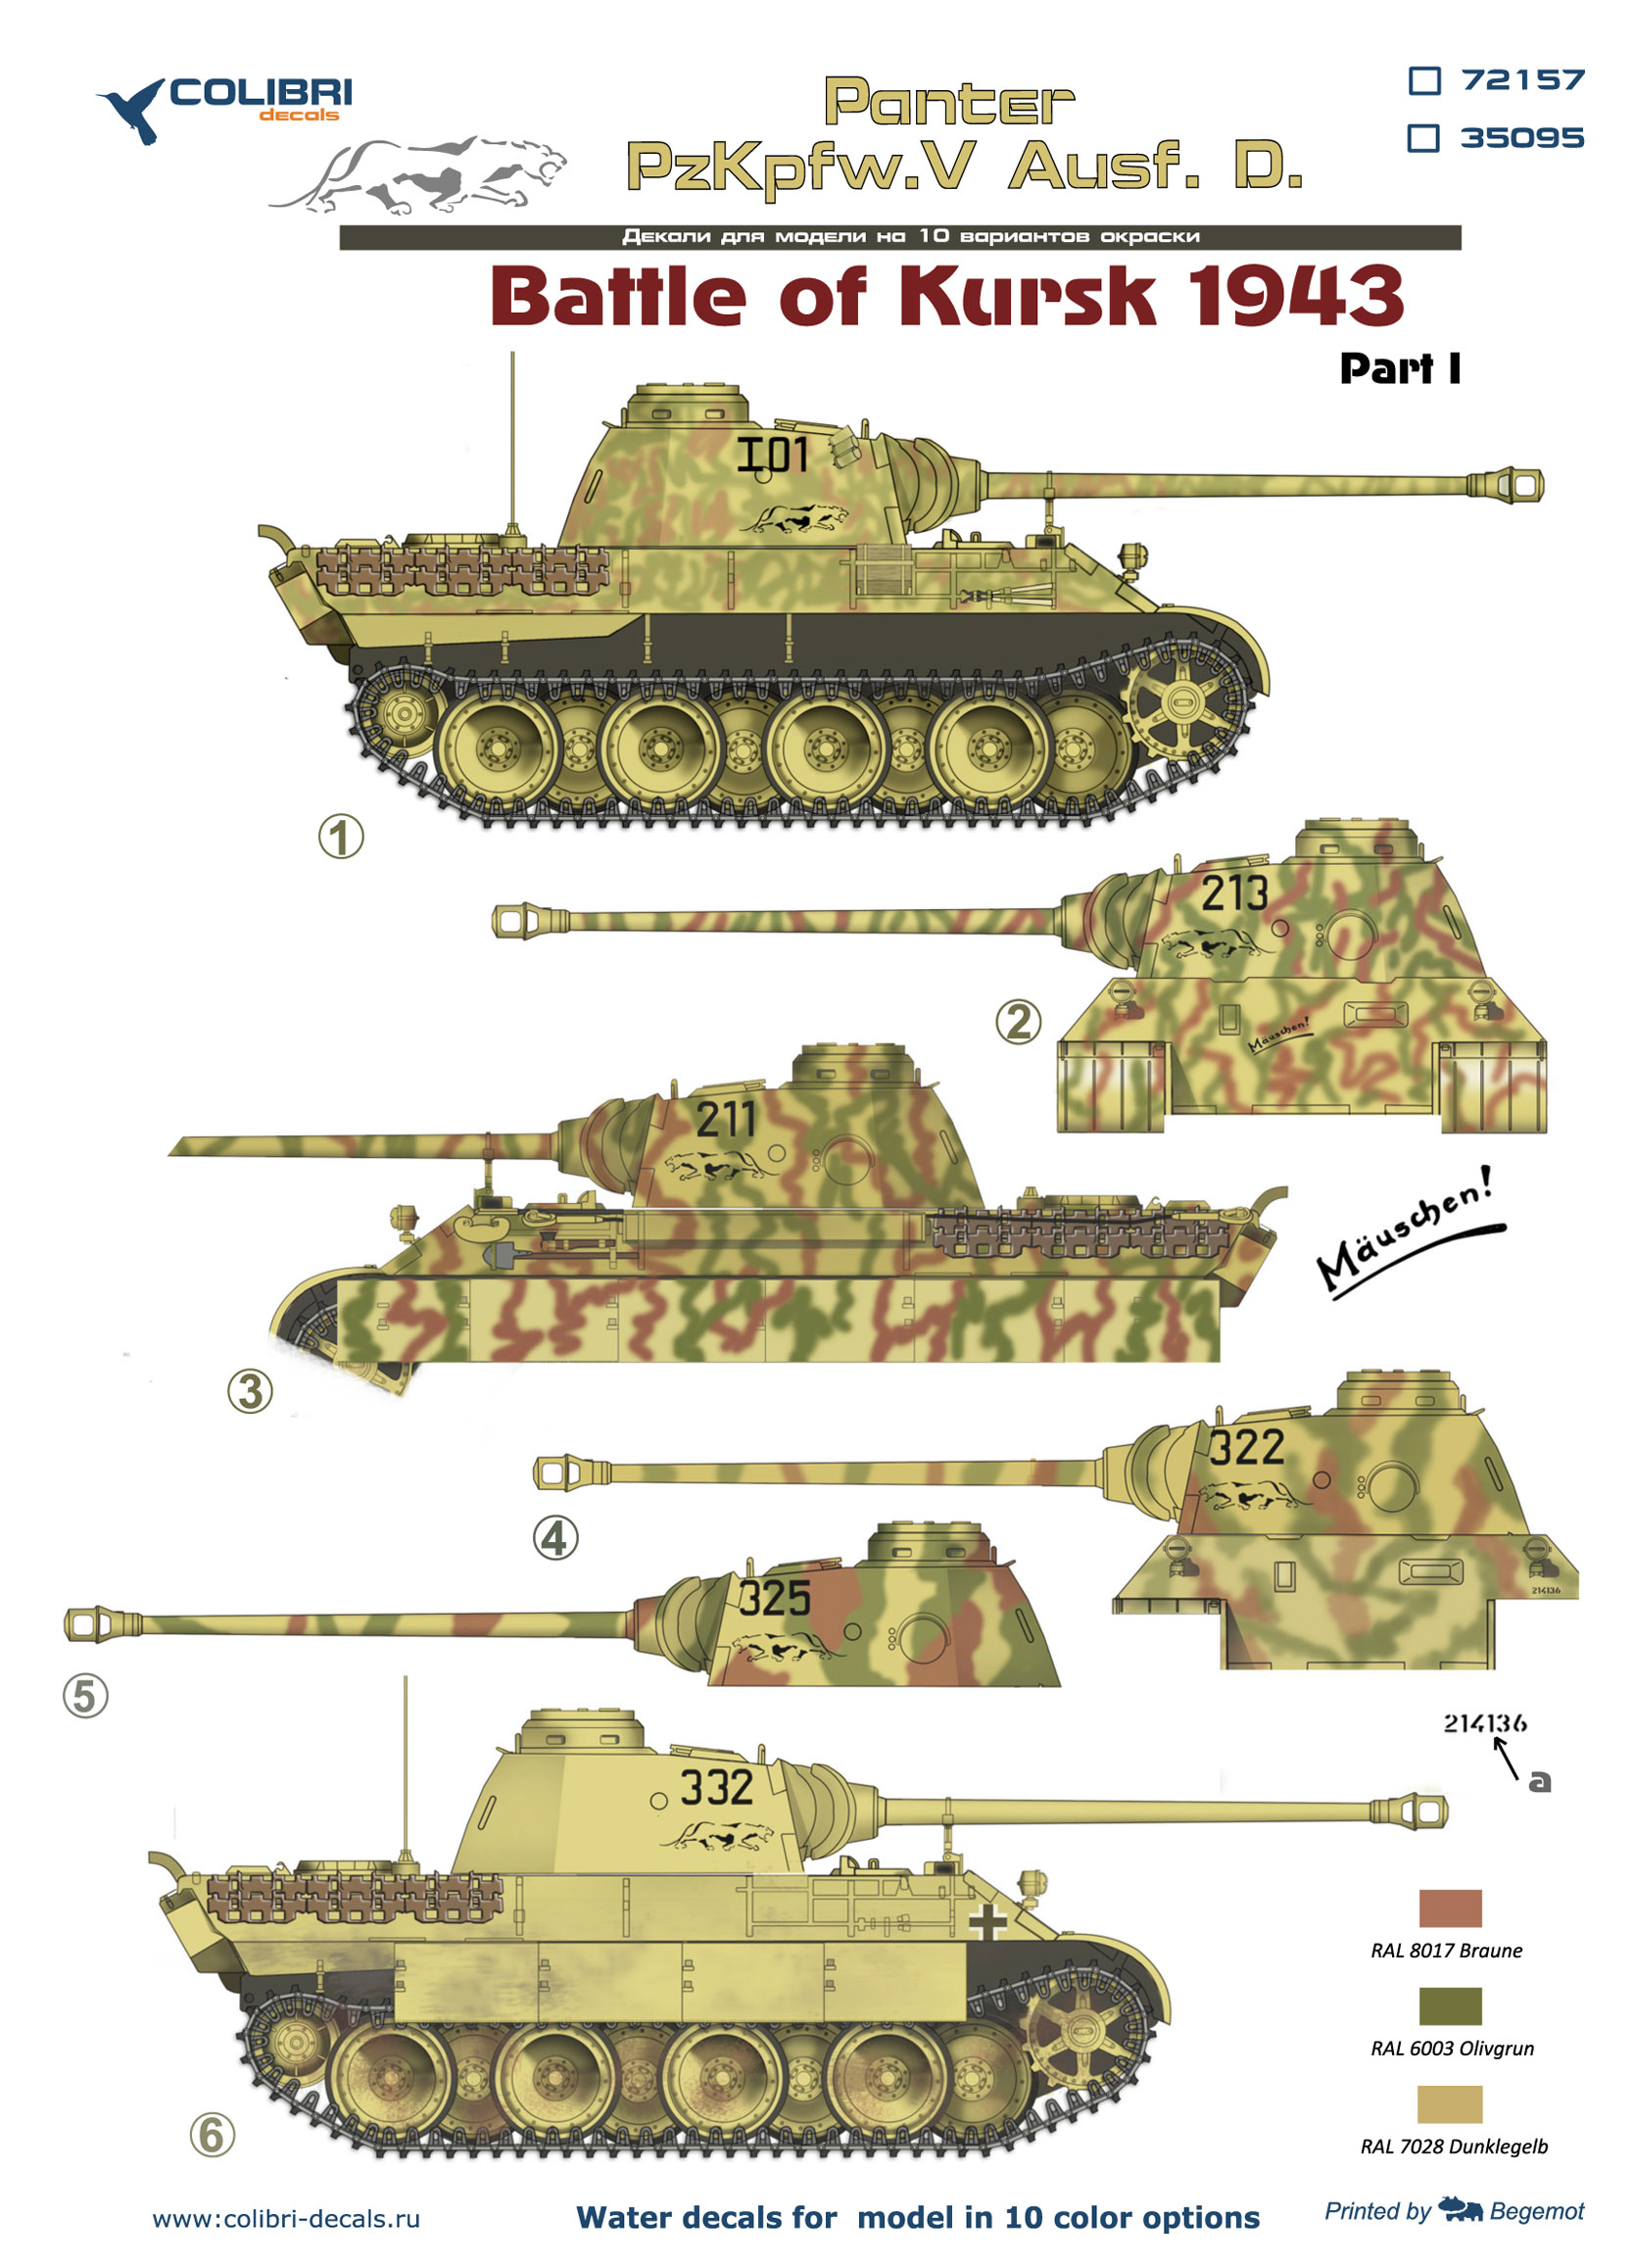 Декаль 1/35 Pz.Kpfw.V Panter Ausf. D Battle of Kursk1943 - Part I (Colibri Decals)